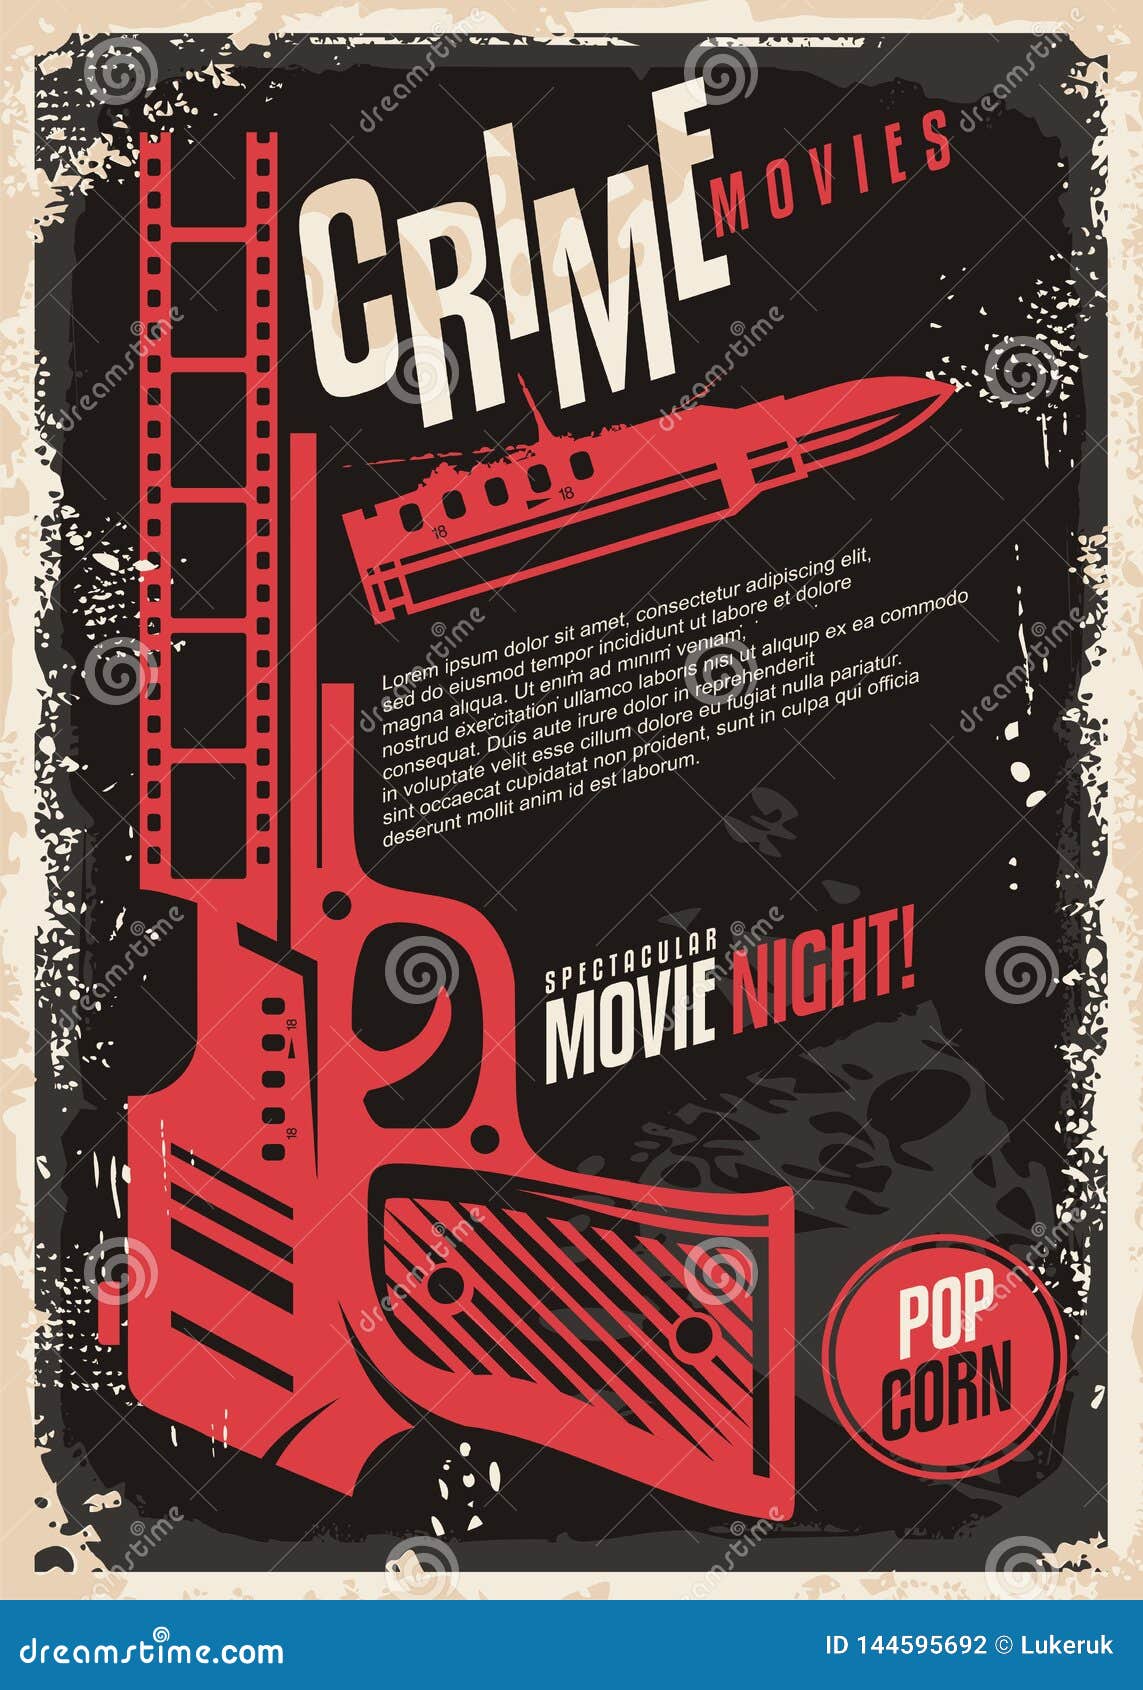 crime movies spectacular movie night retro poster 